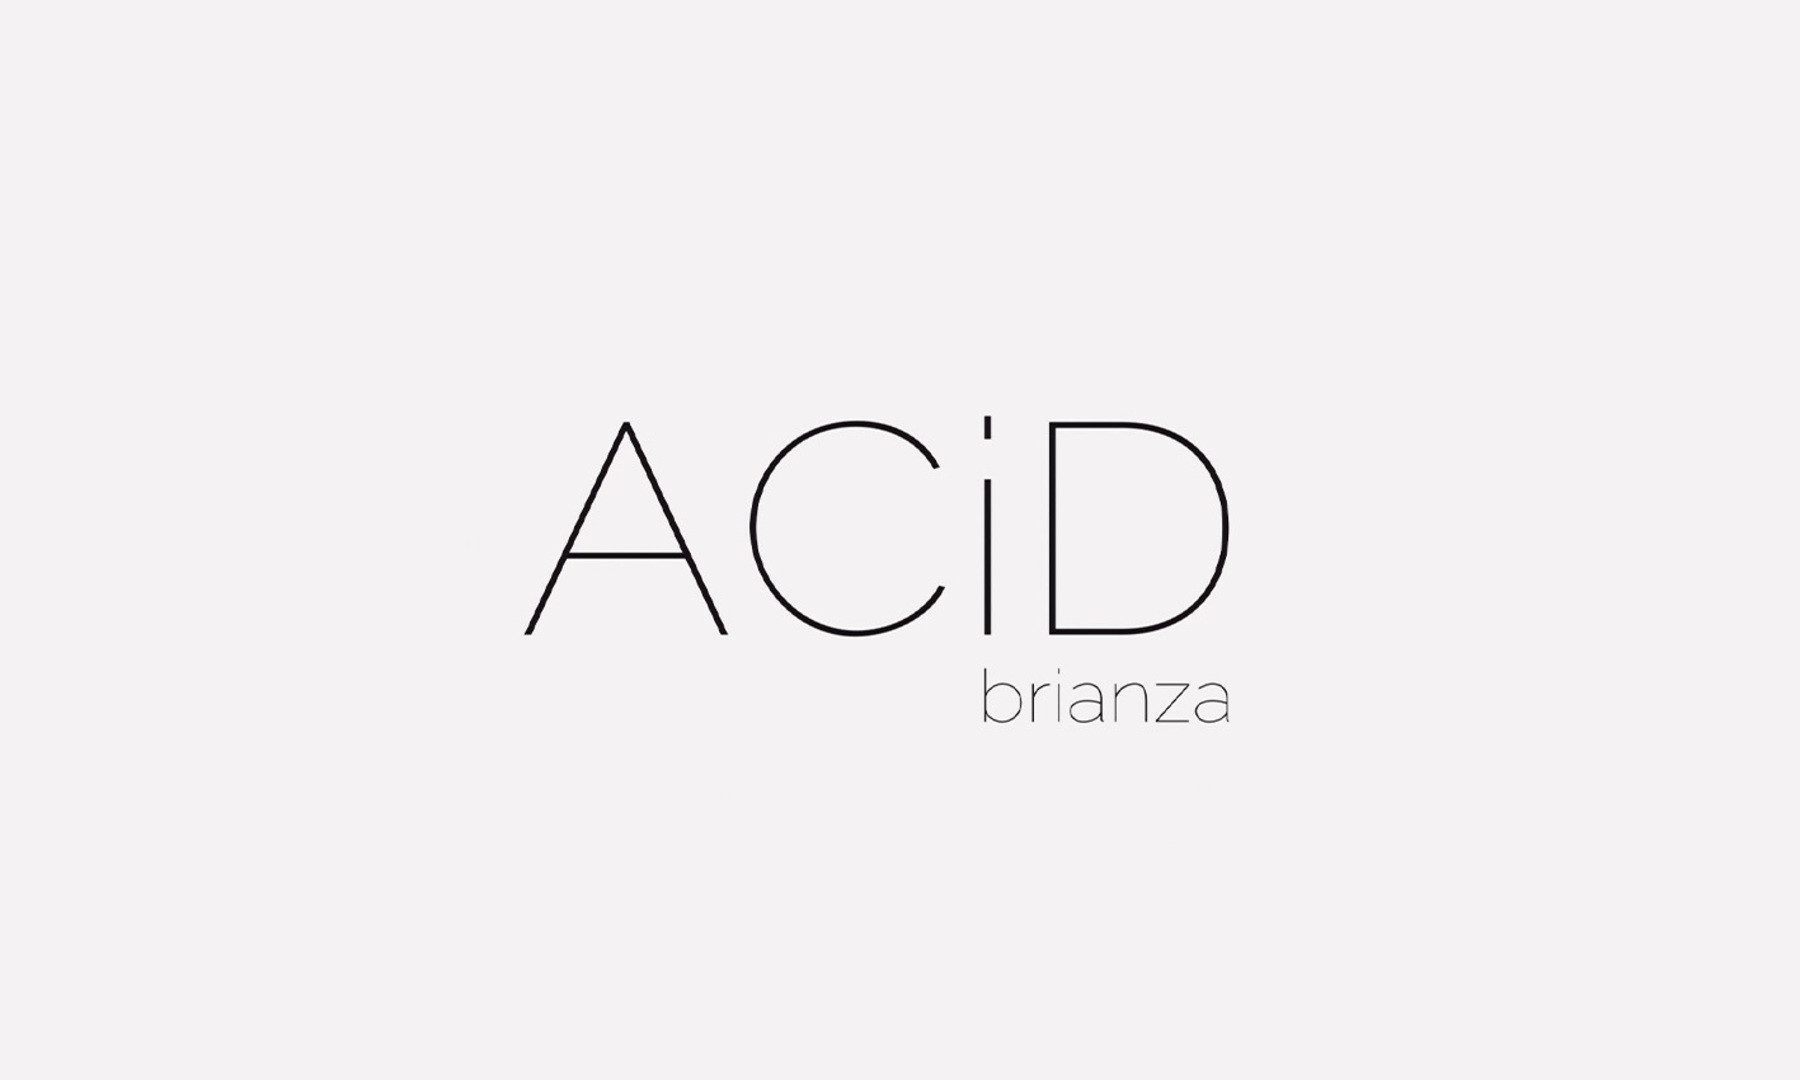 ACiD brianza's images2